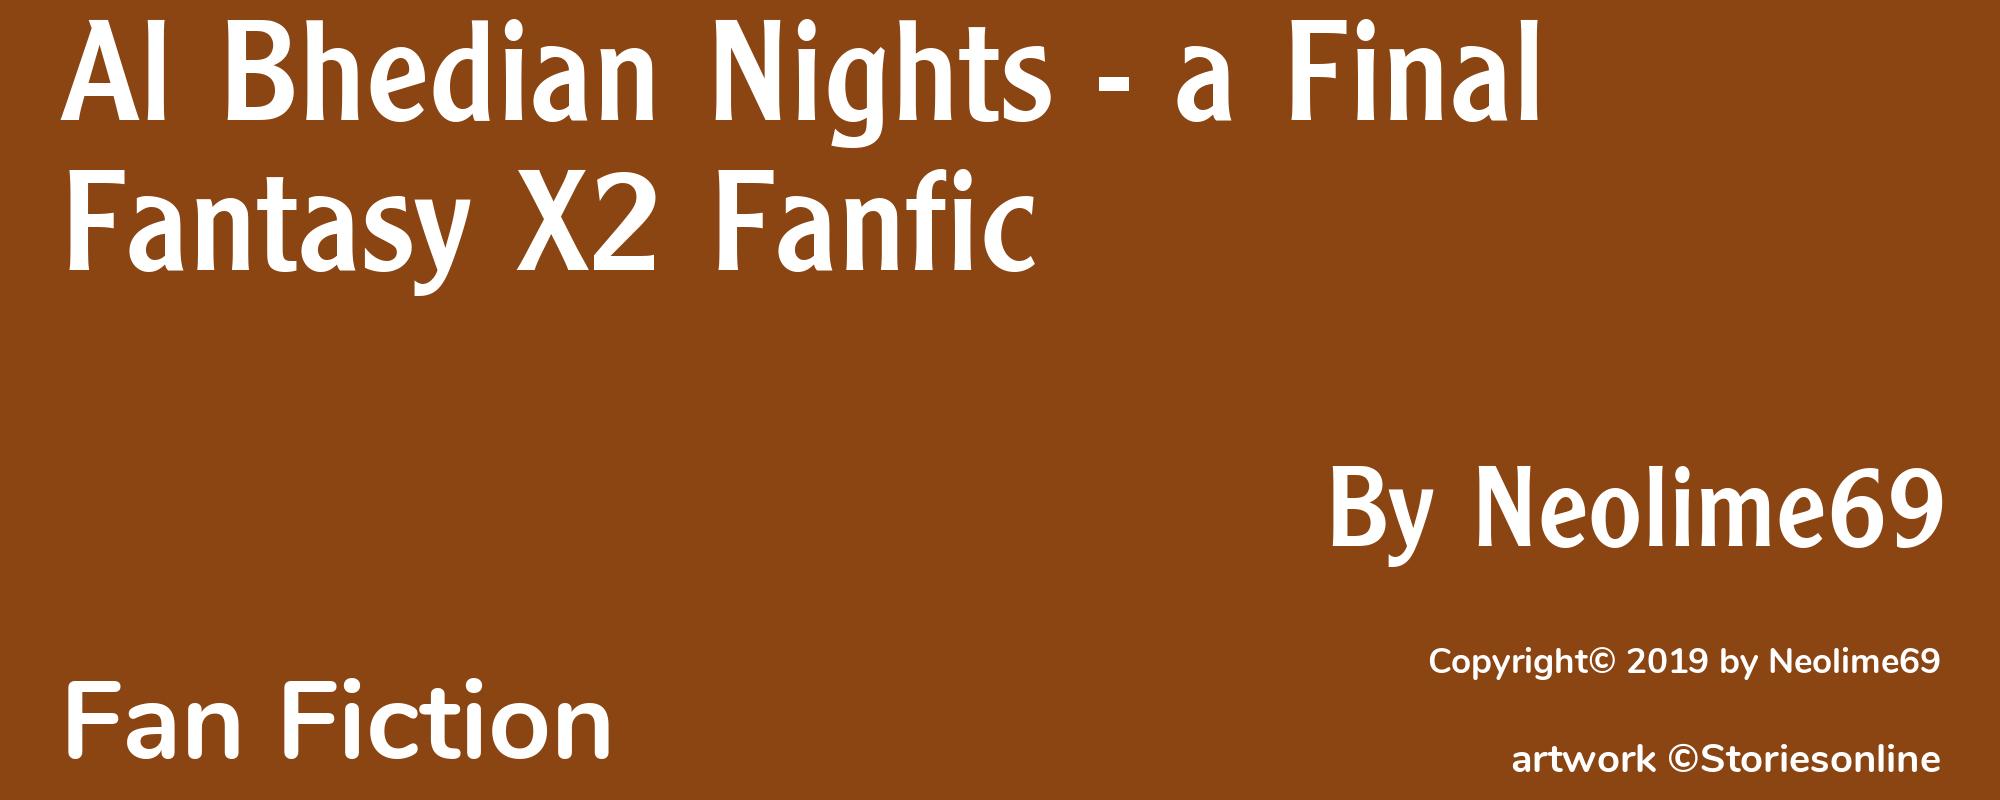 Al Bhedian Nights - a Final Fantasy X2 Fanfic - Cover